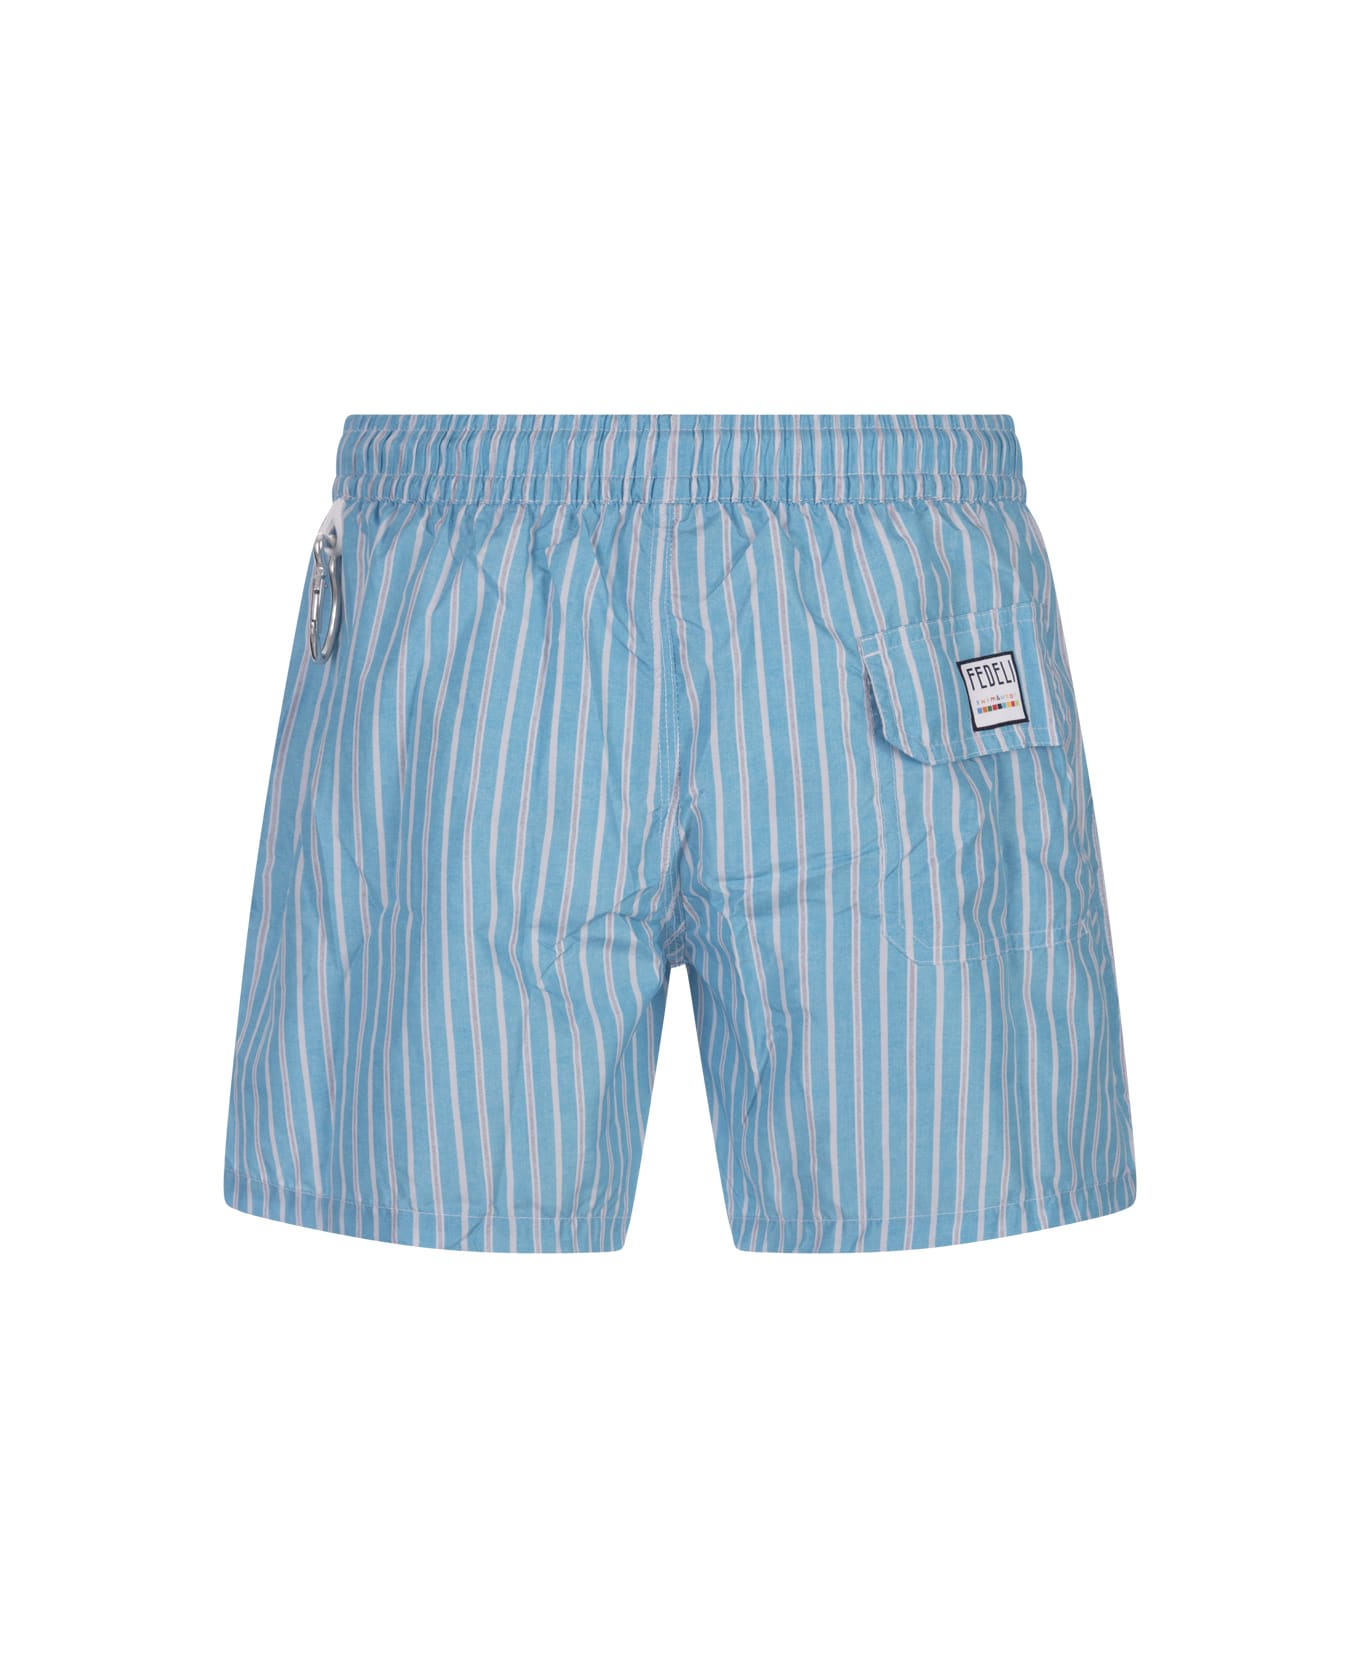 Fedeli Light Blue Striped Swim Shorts - Blue